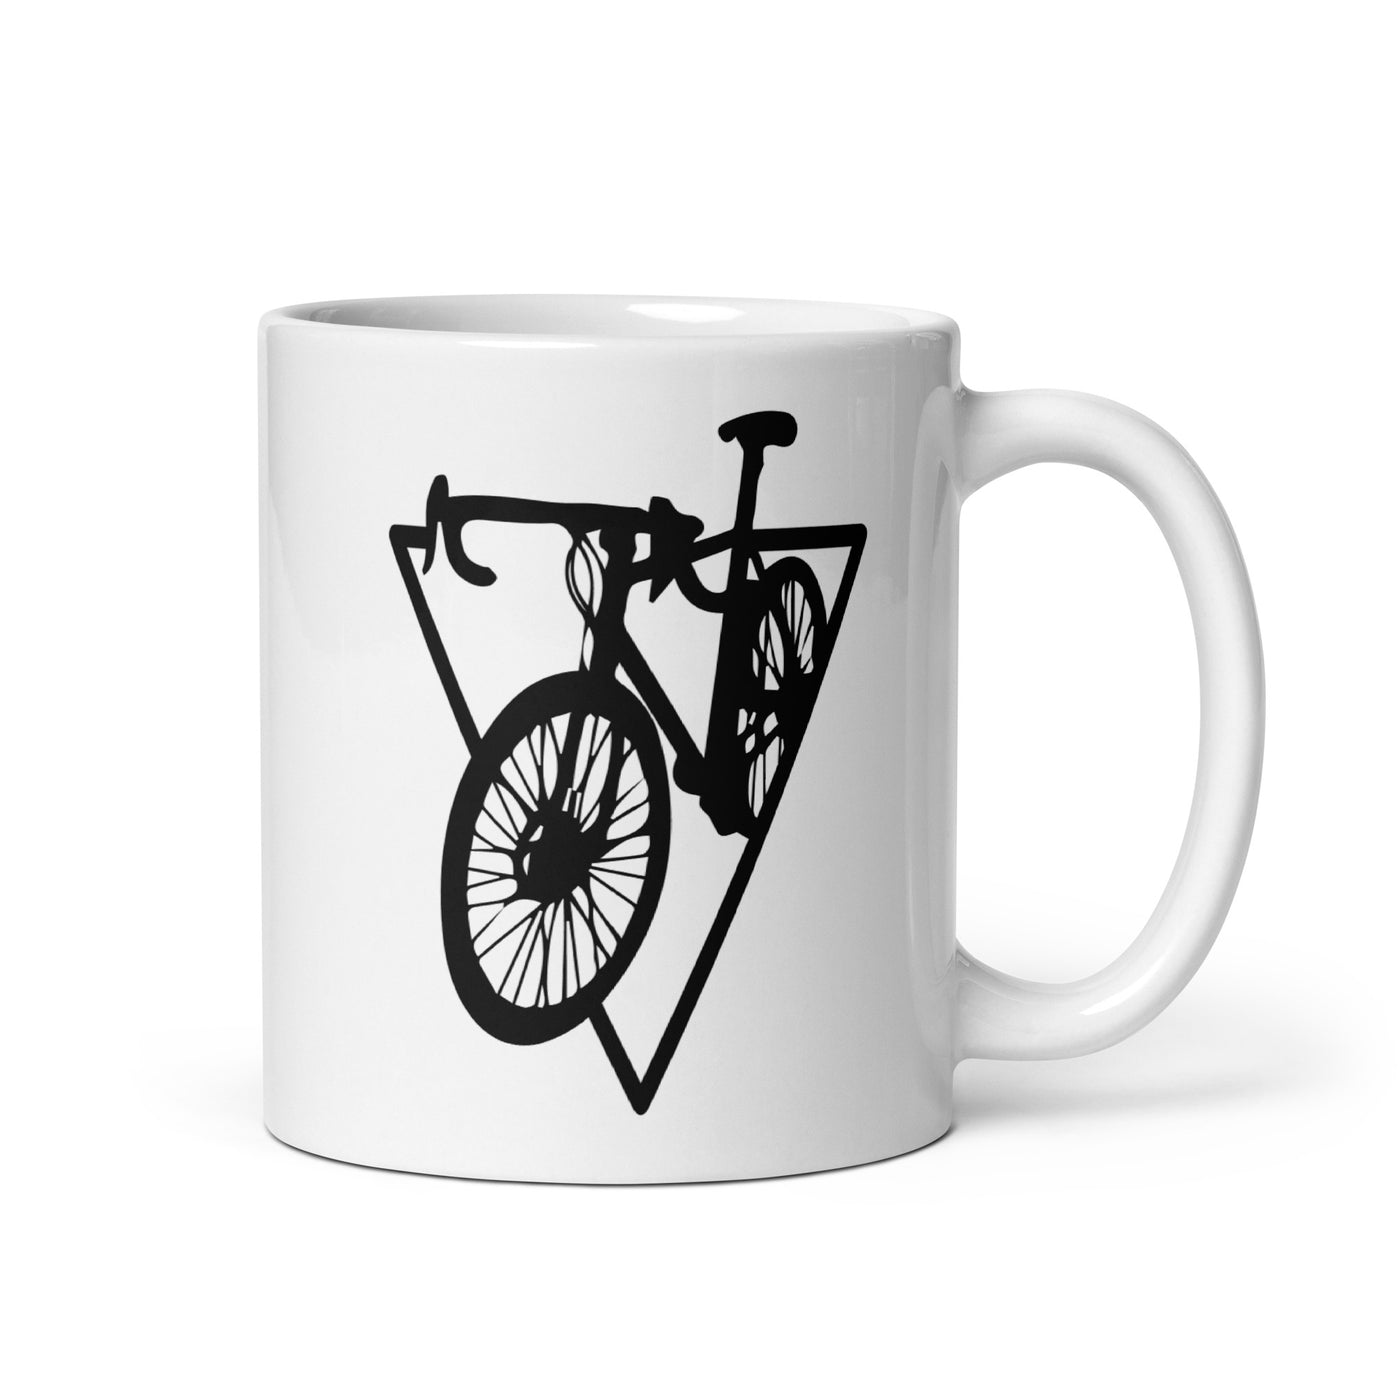 Triangle - Cycling - Tasse fahrrad